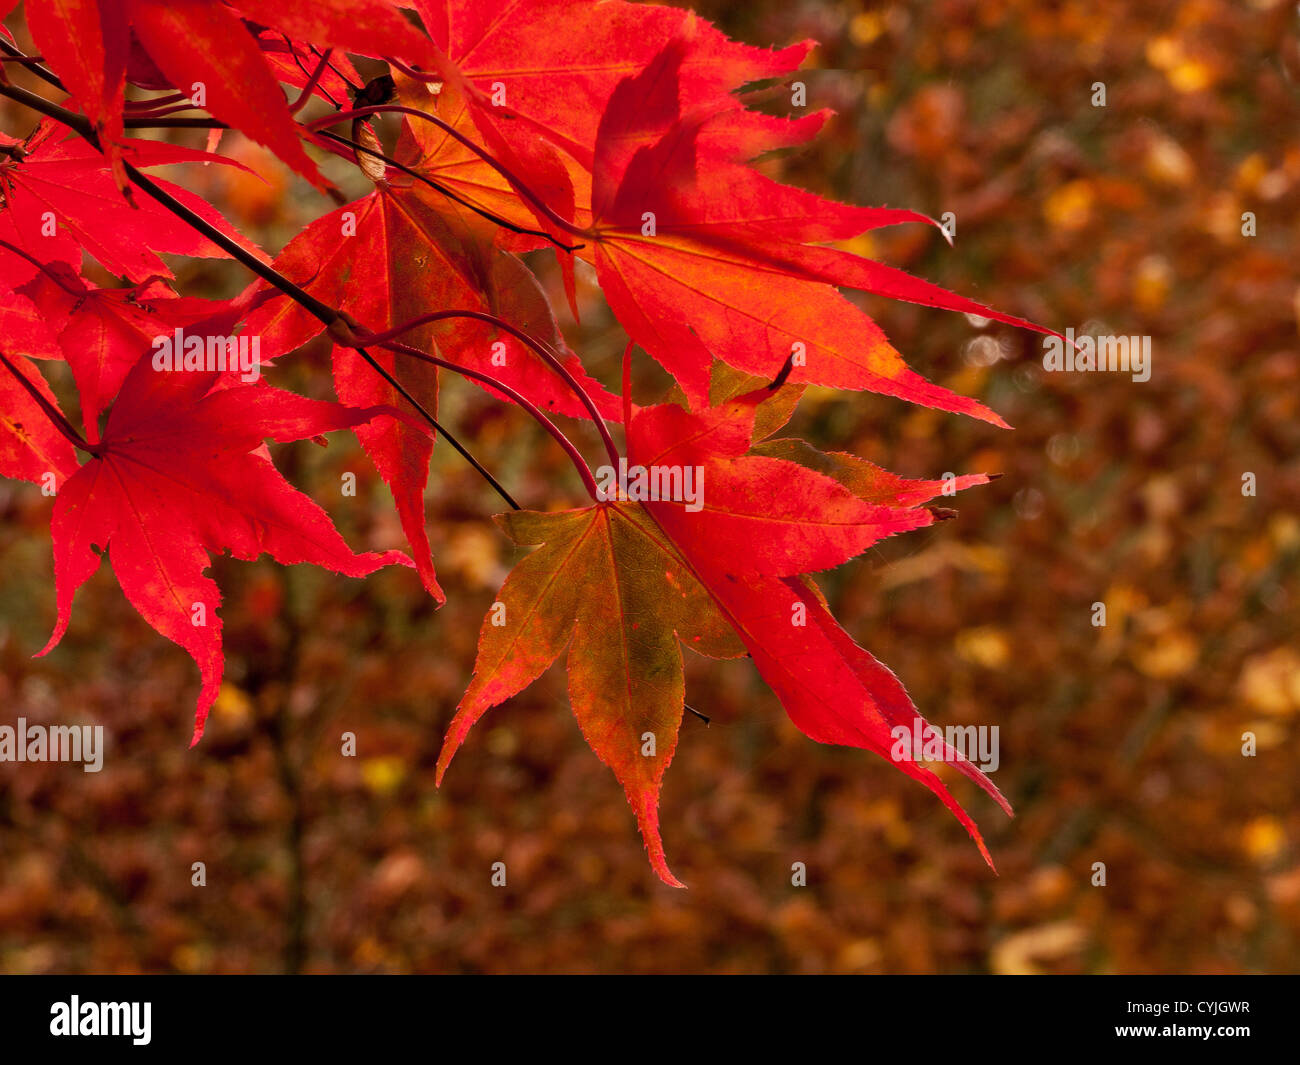 Acer leaves, common name Maple, in full Autumn colour  in Winkworth Arboretum, Surrey, UK Stock Photo